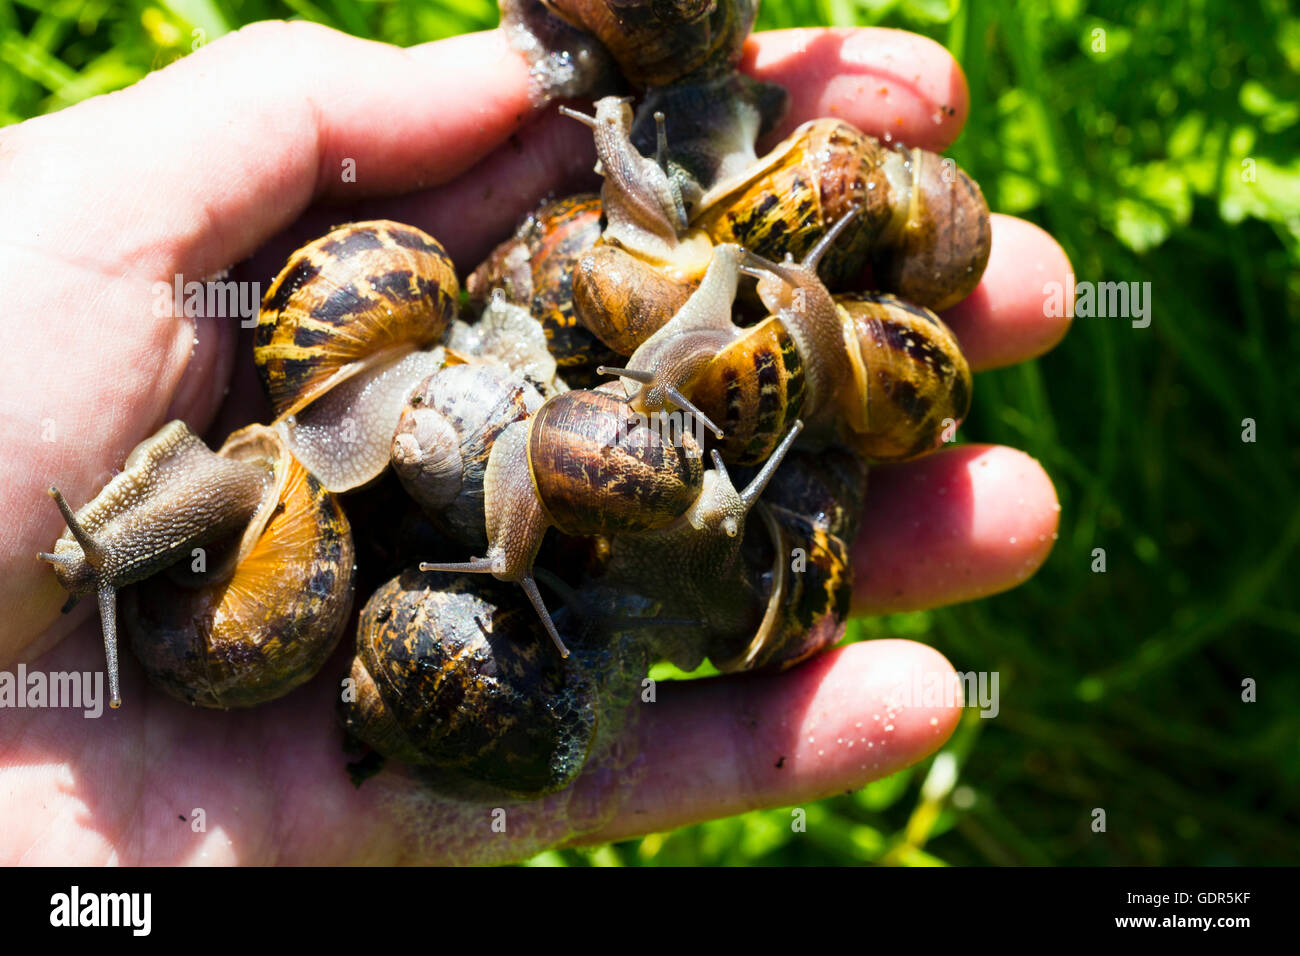 Gardener holding snails in his hand, Bristol, UK Stock Photo